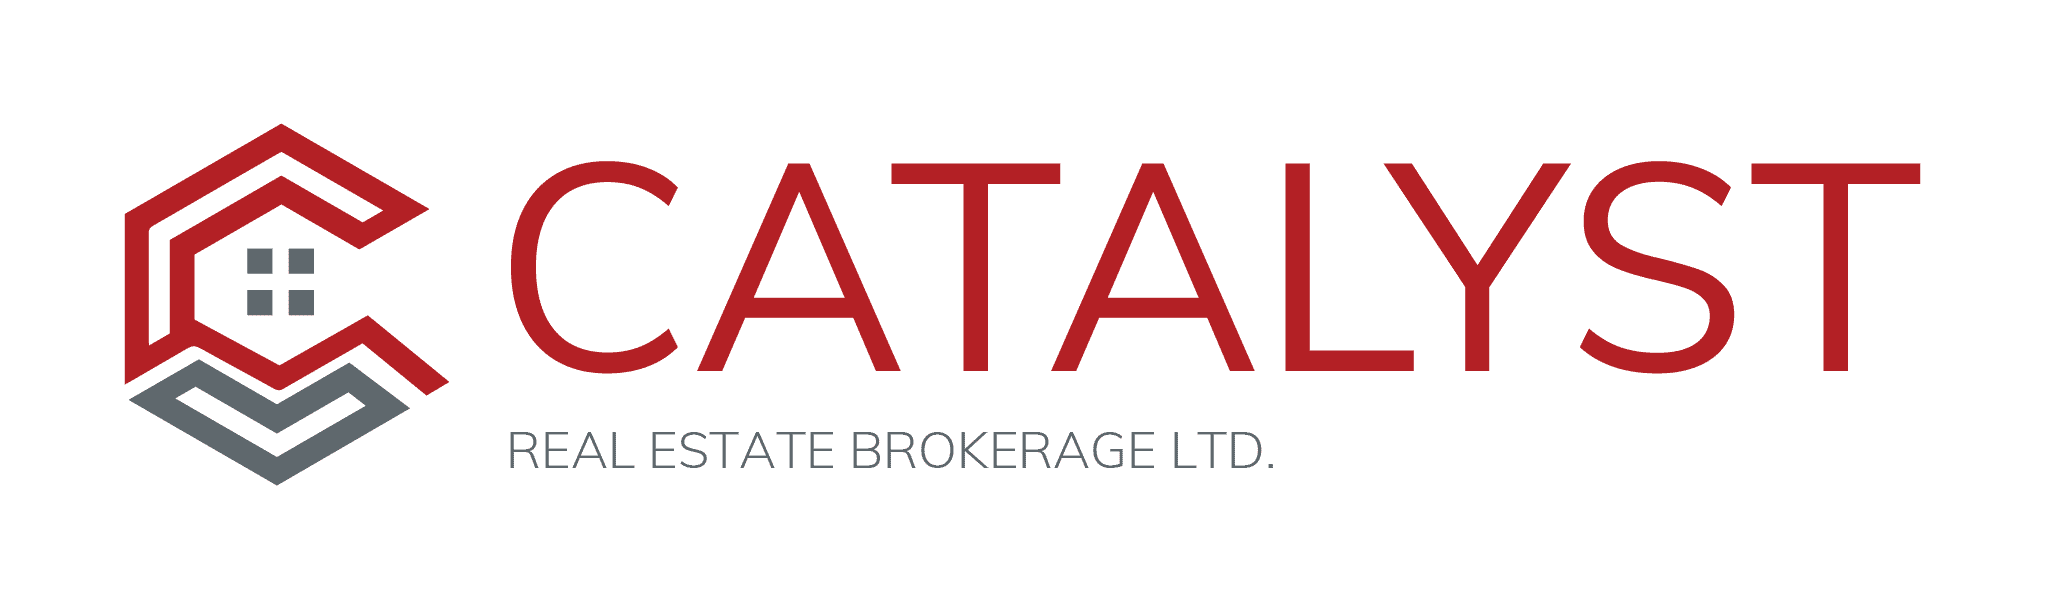 Catalyst Real Estate Brokerage Ltd